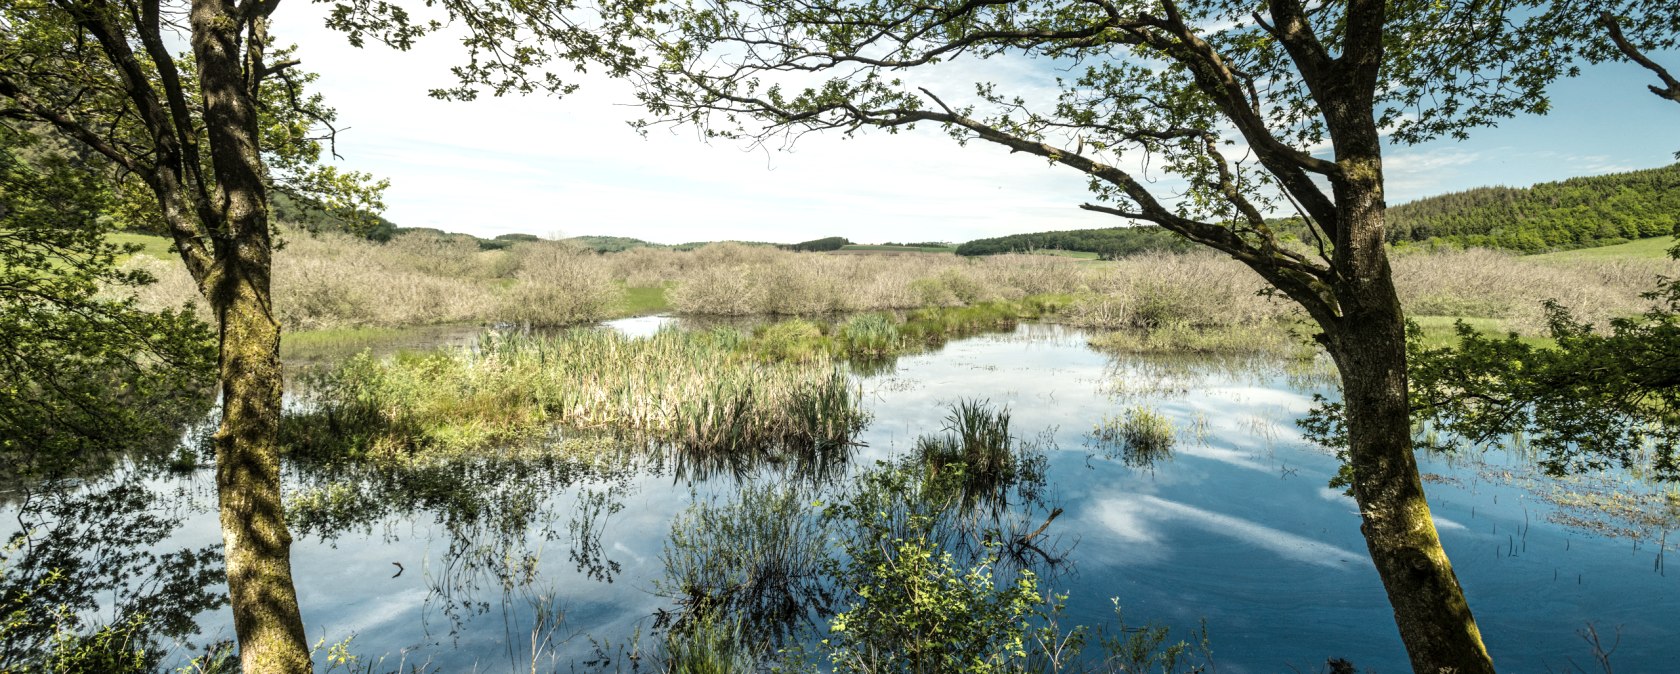 Naturschutzgebiet Murmes, © Eifel Tourismus GmbH, Dominik Ketz